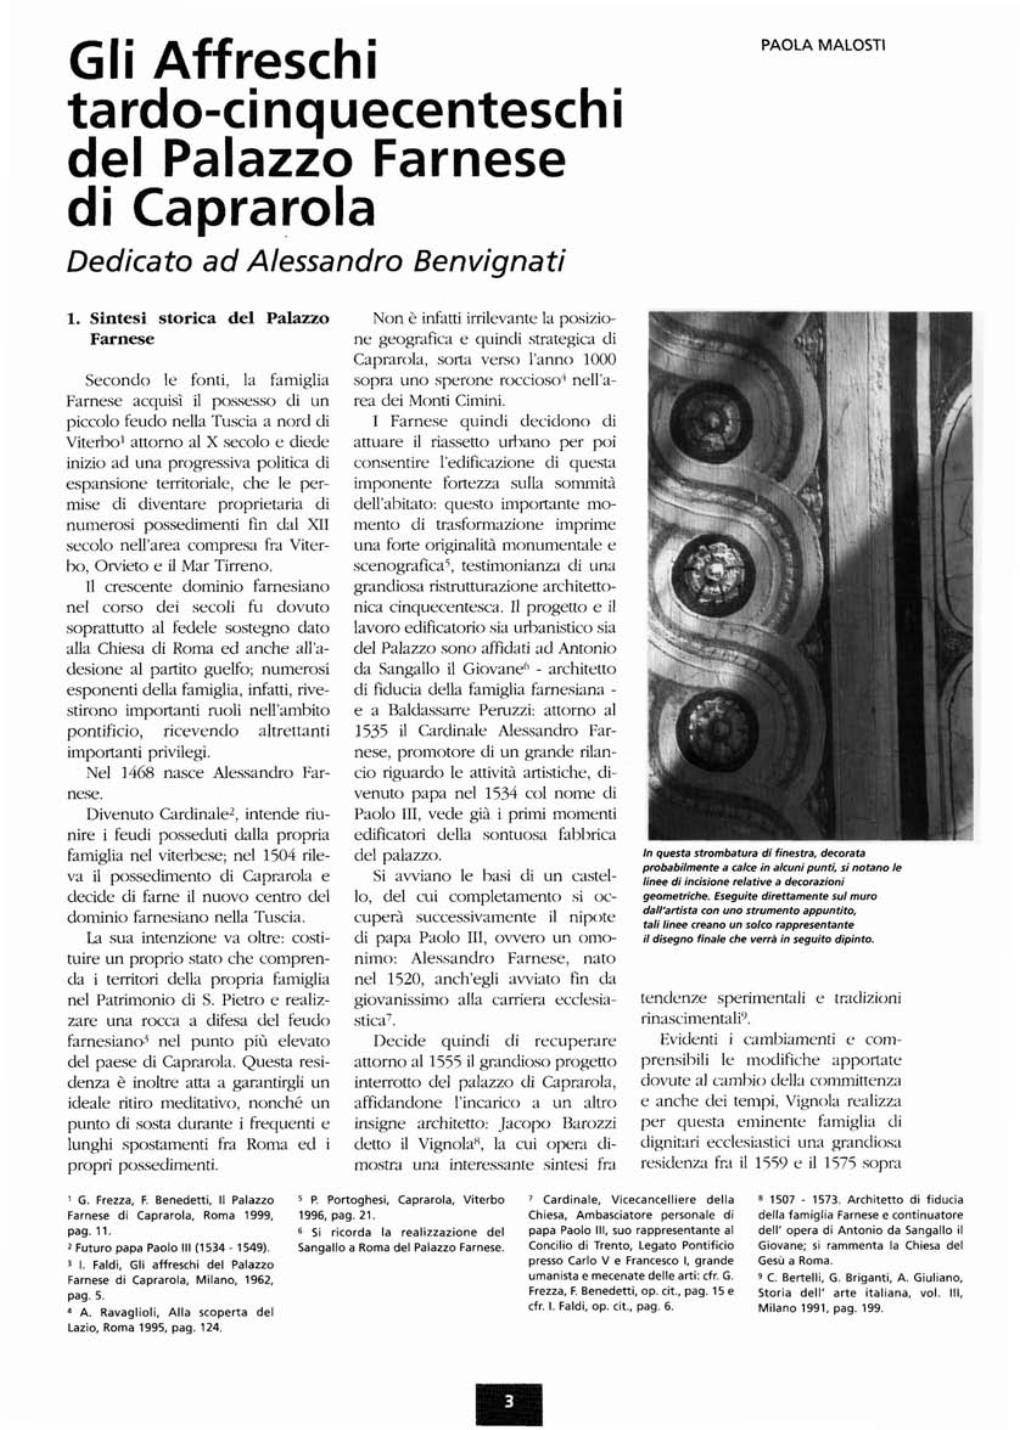 Gli Affreschi Tardo-Cinauecentesch' Azio Farnese Di Caprarola